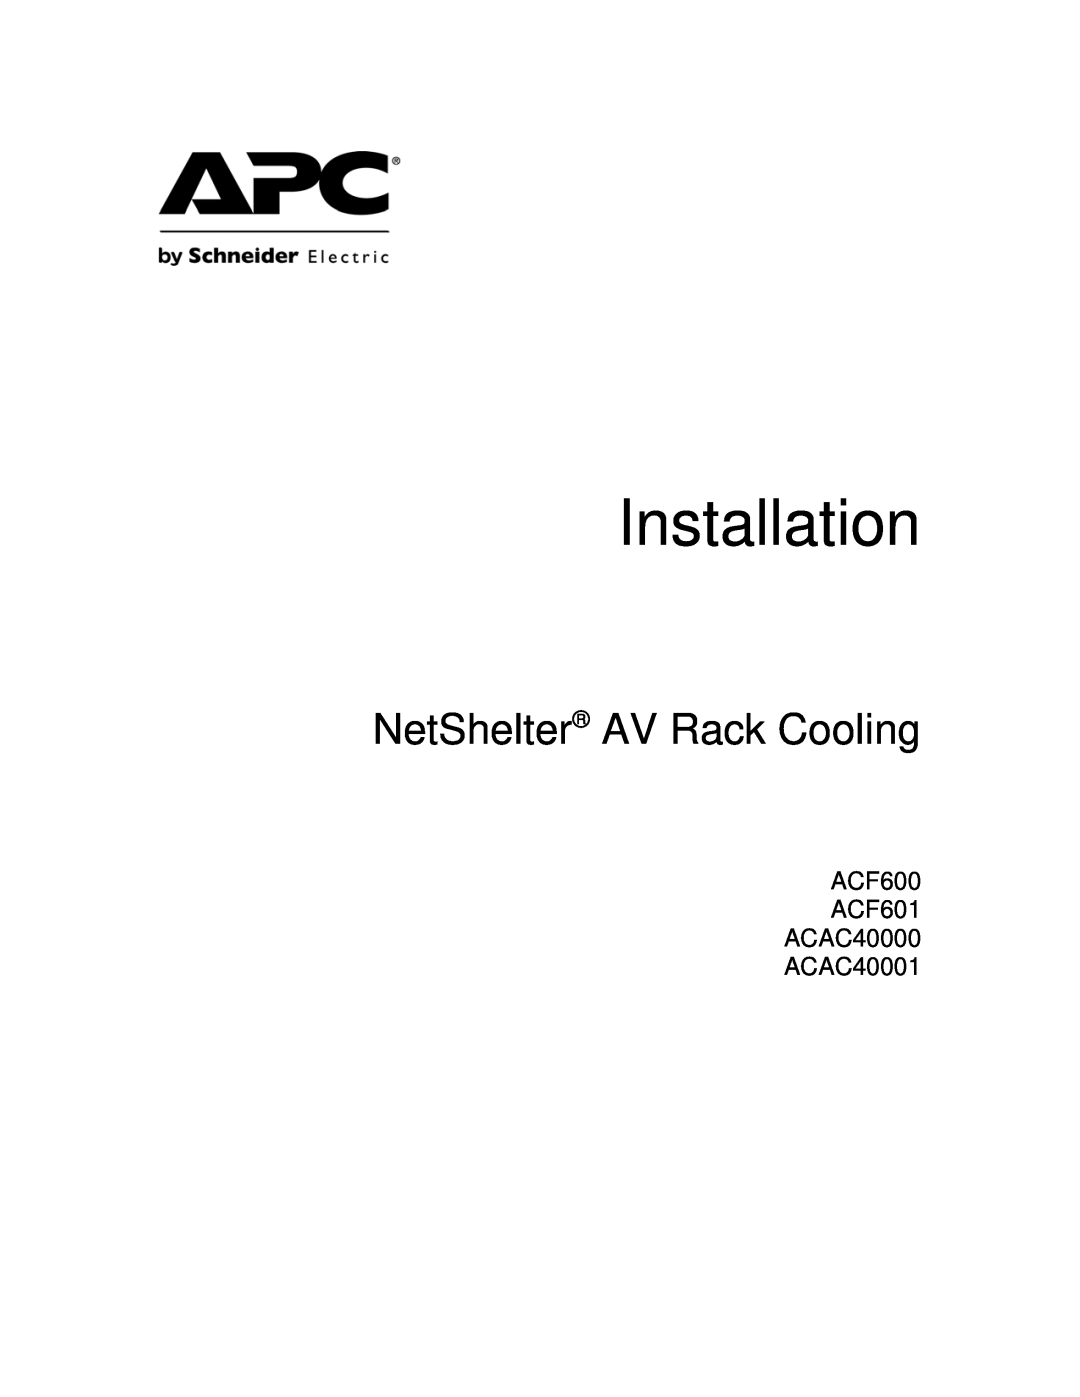 APC manual ACF600 ACF601 ACAC40000 ACAC40001, Installation, NetShelter AV Rack Cooling 